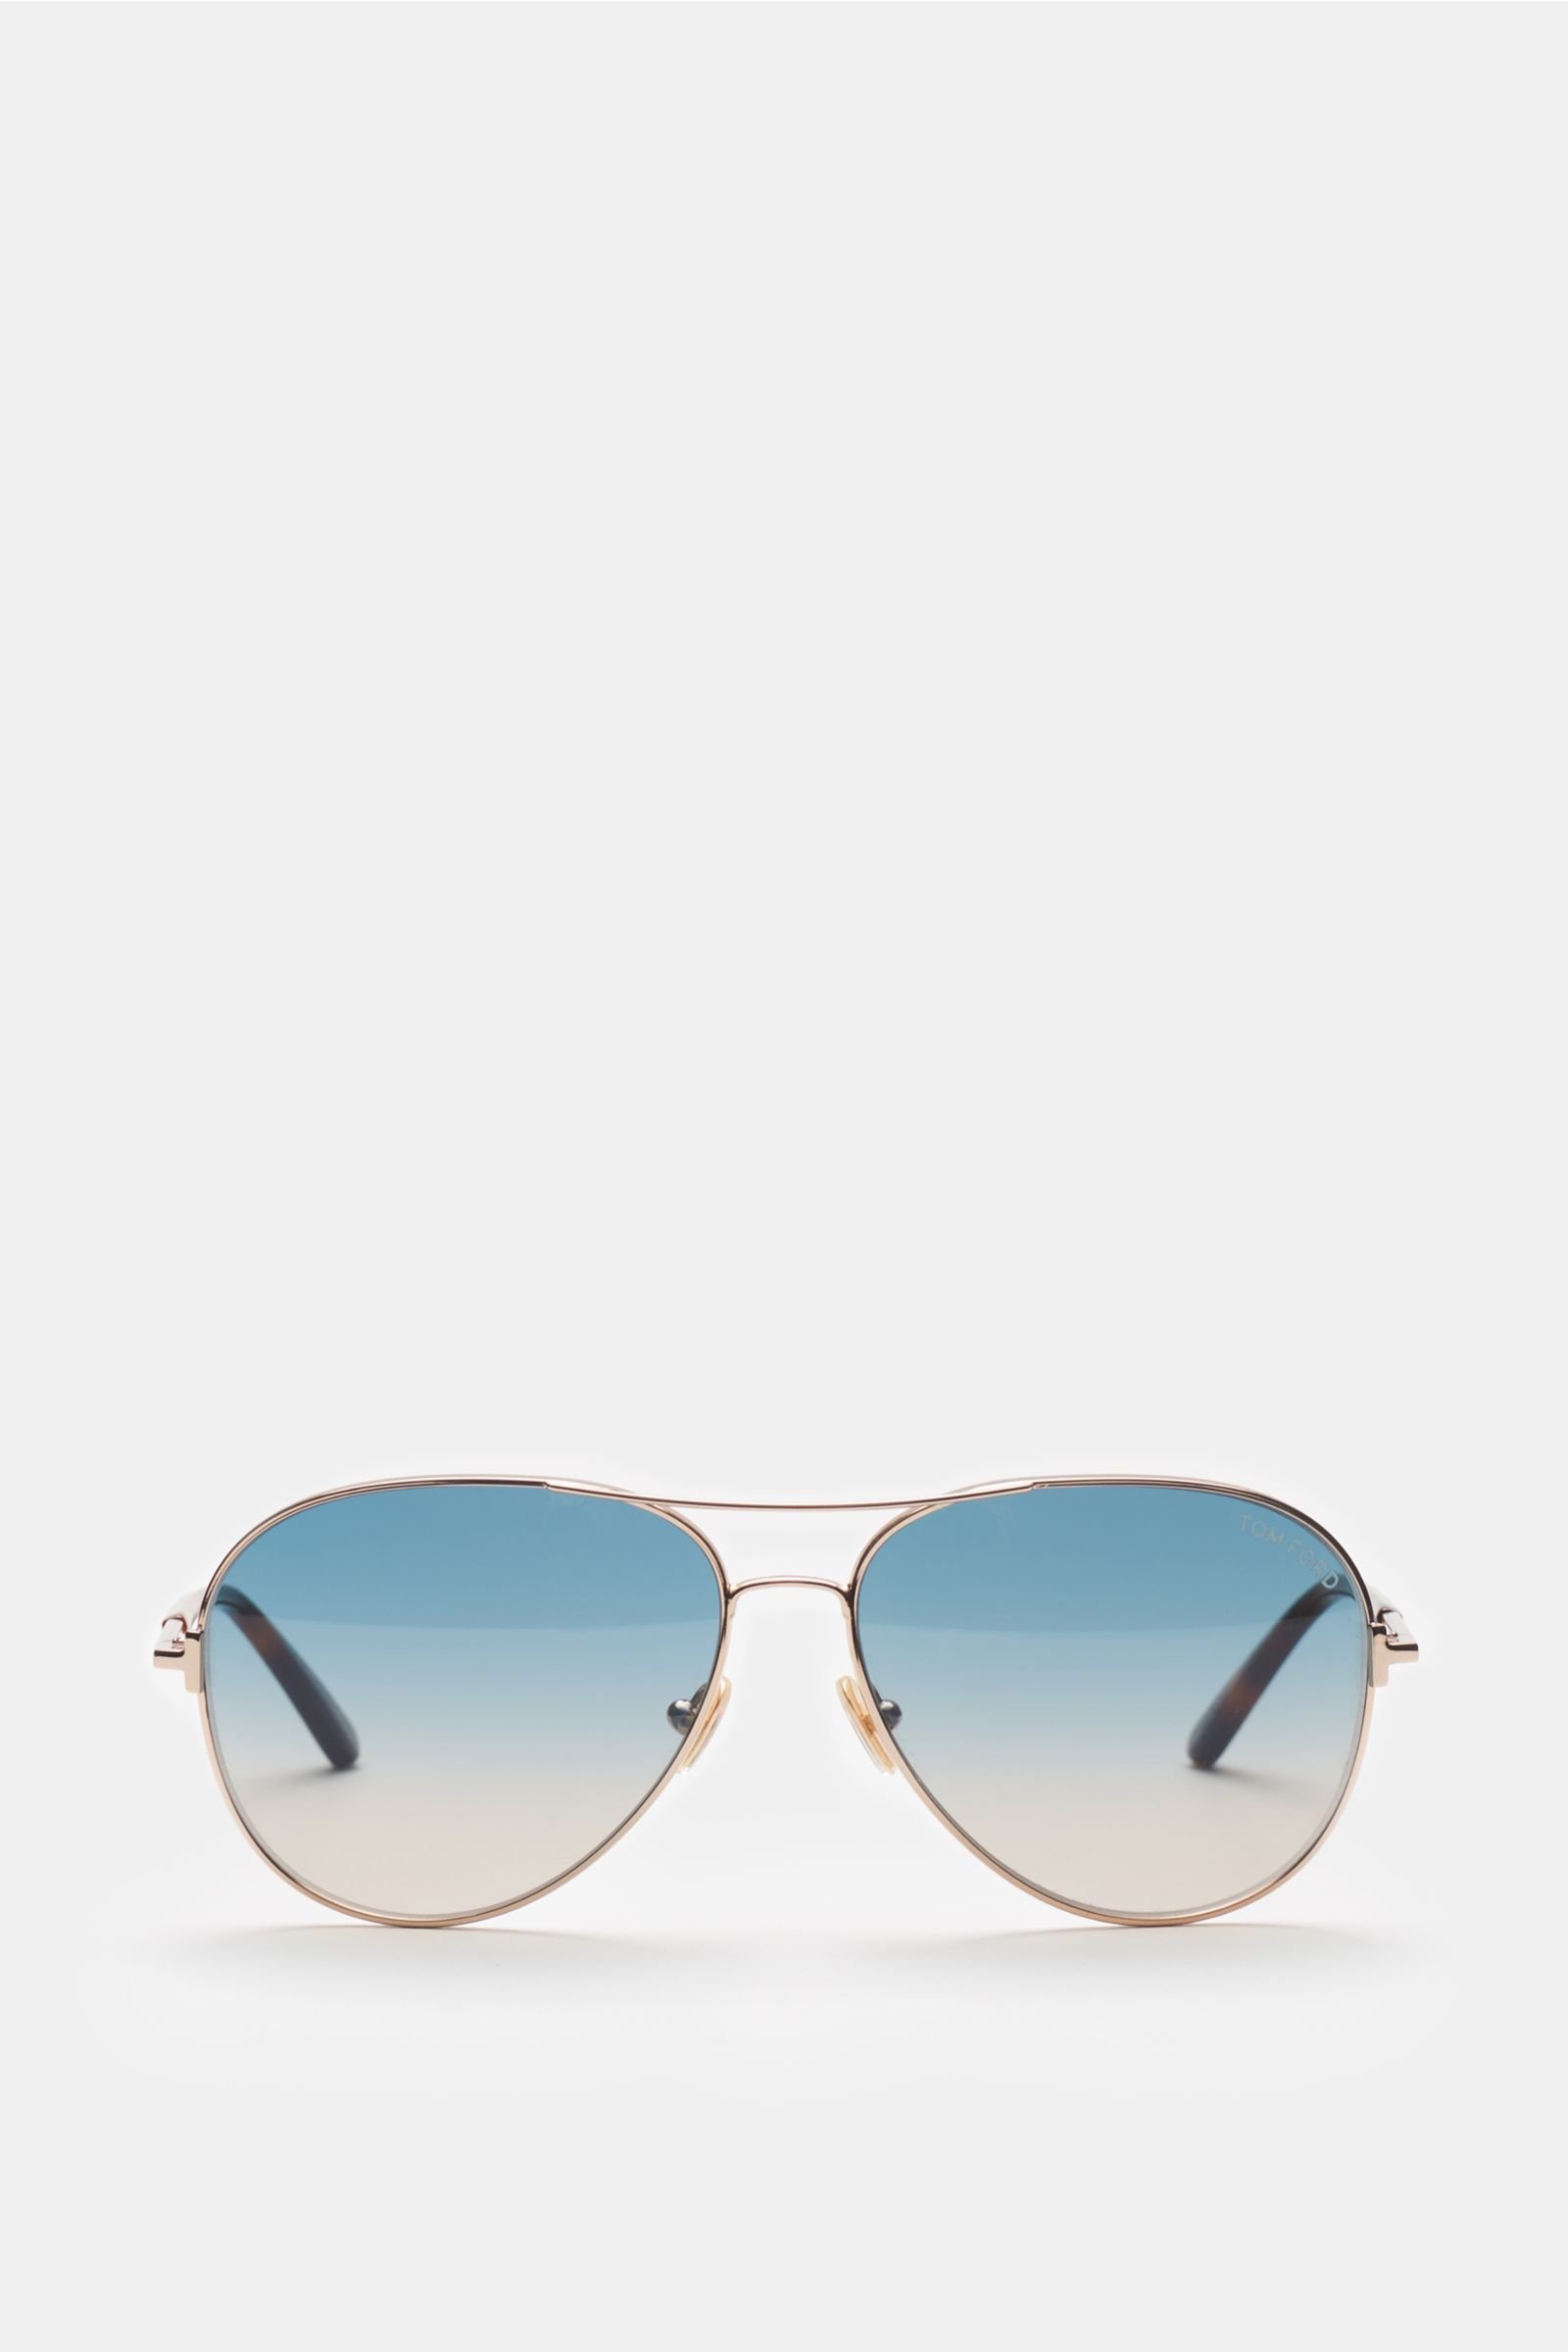 Sunglasses 'Clark' silver/blue